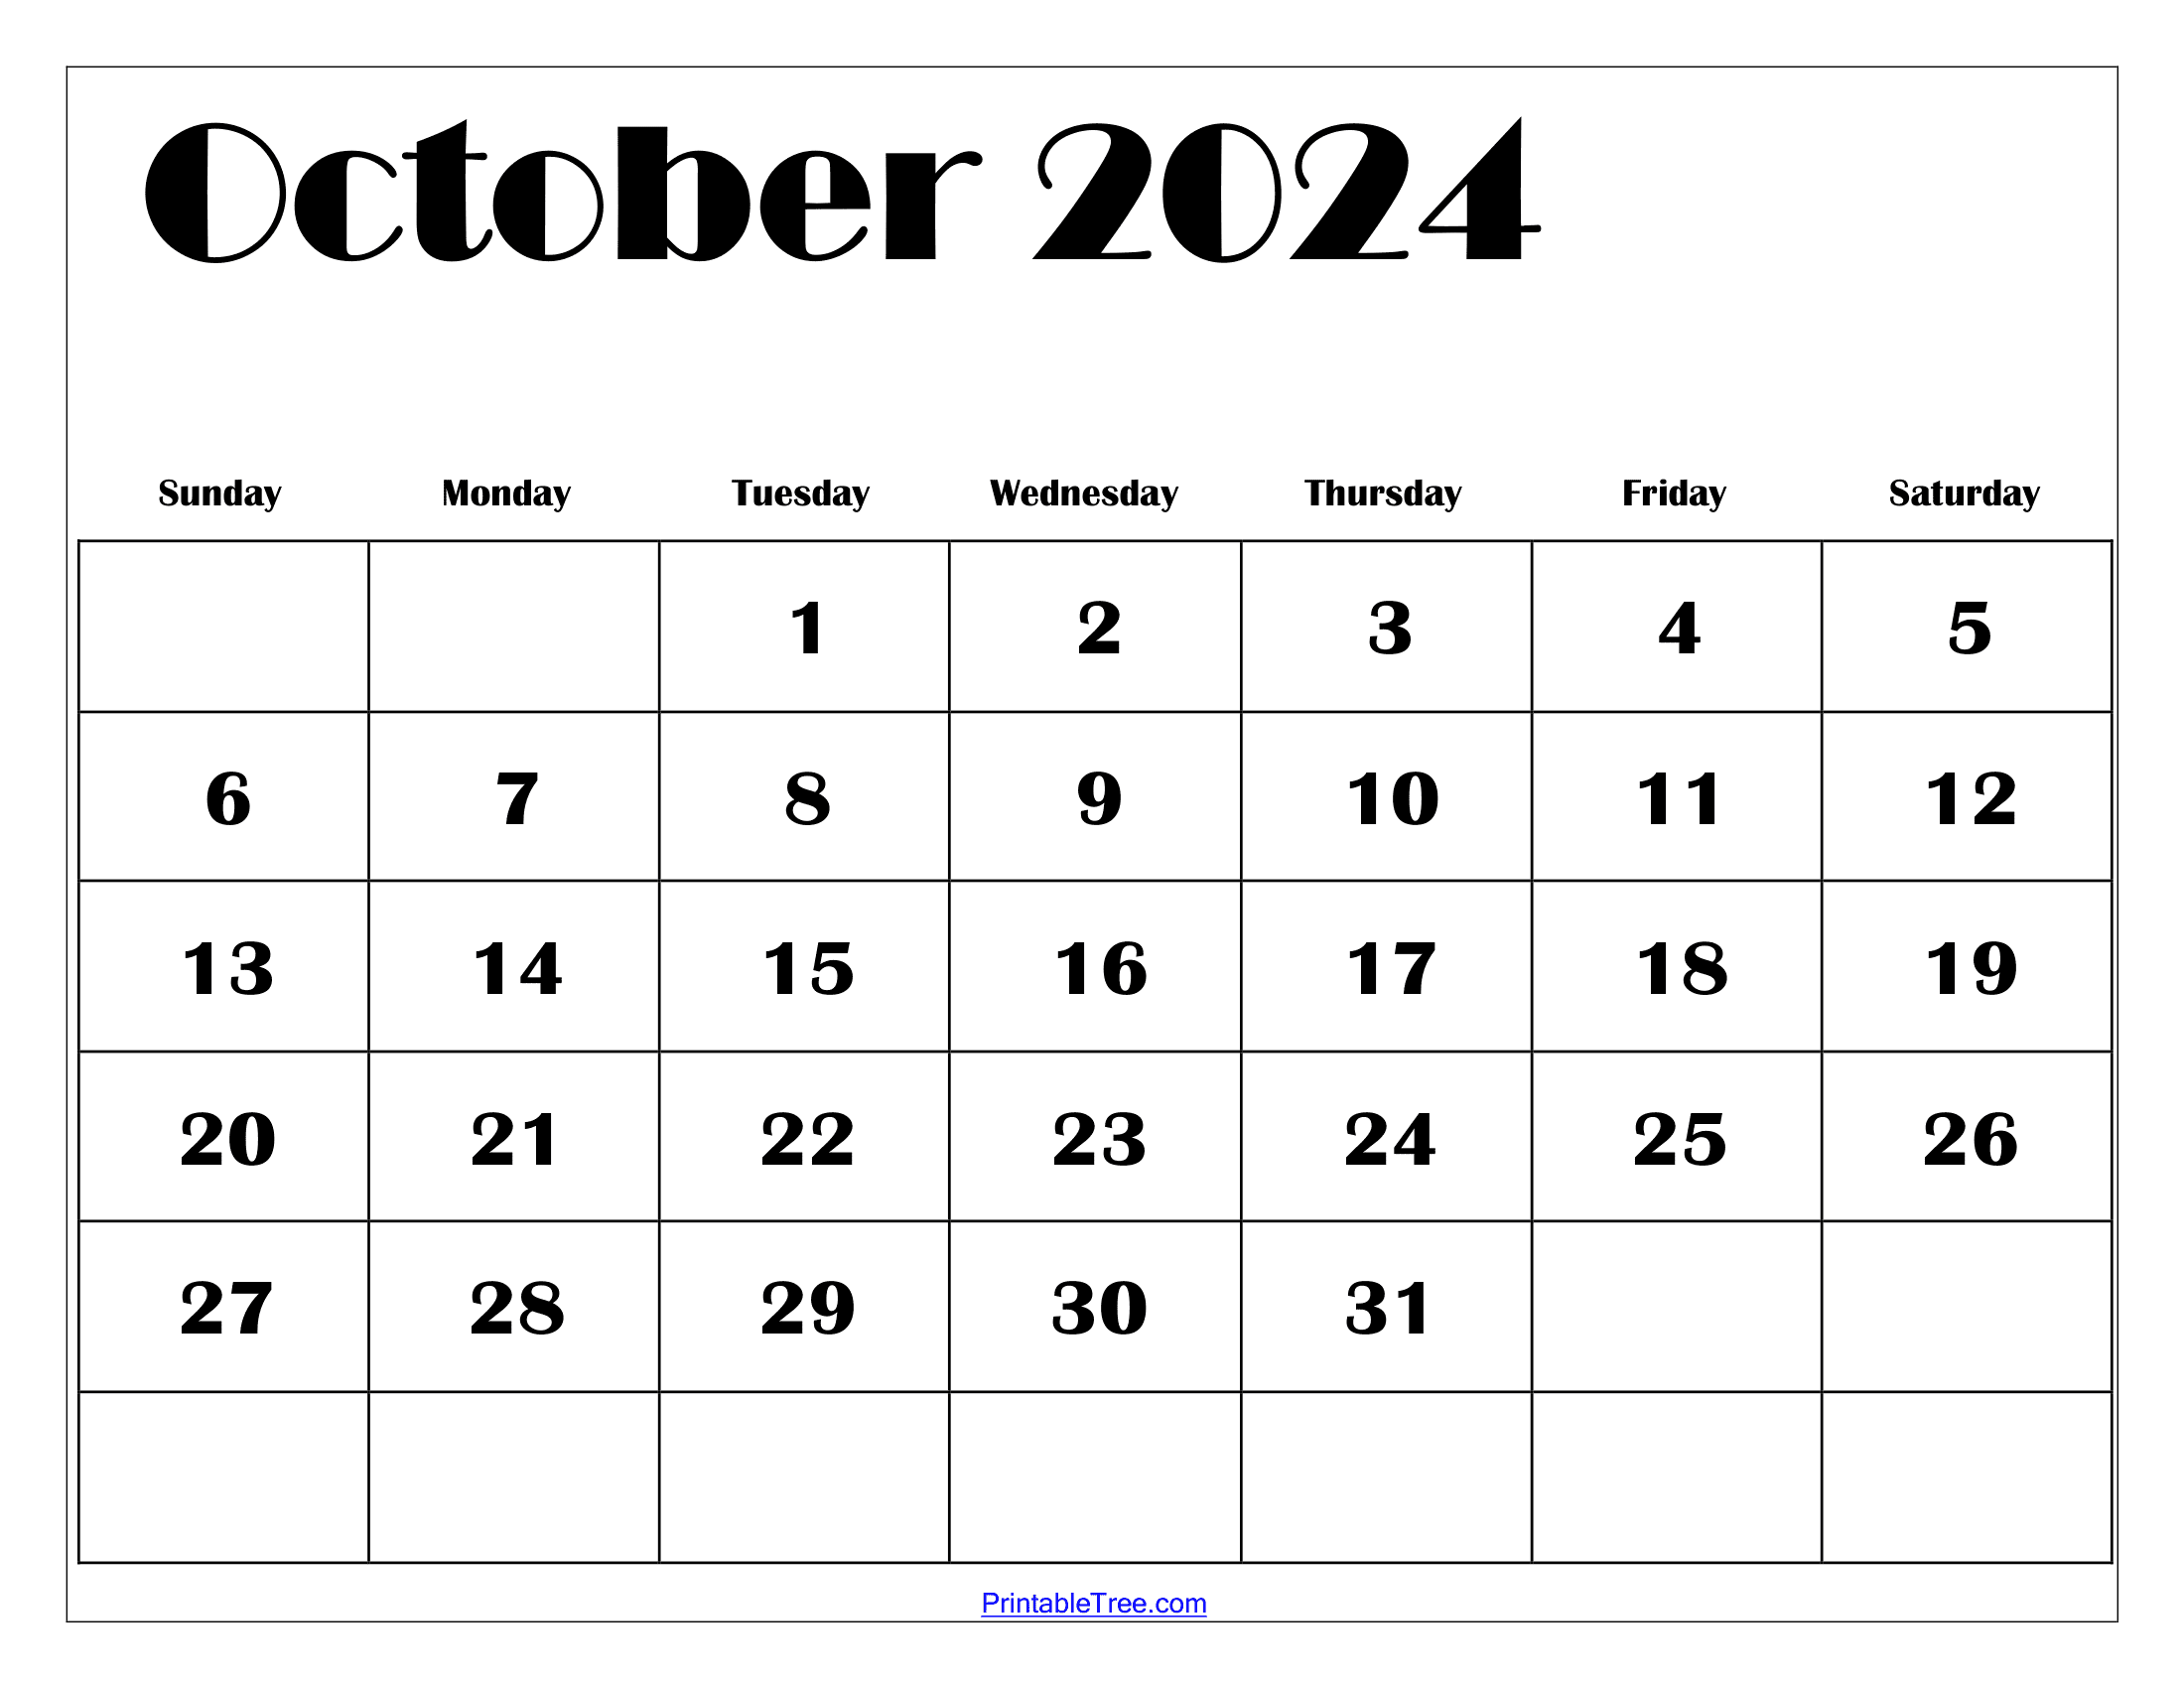 October 2024 Calendar Printable Pdf Free Templates With Holidays for October 2024 Free Printable Calendar